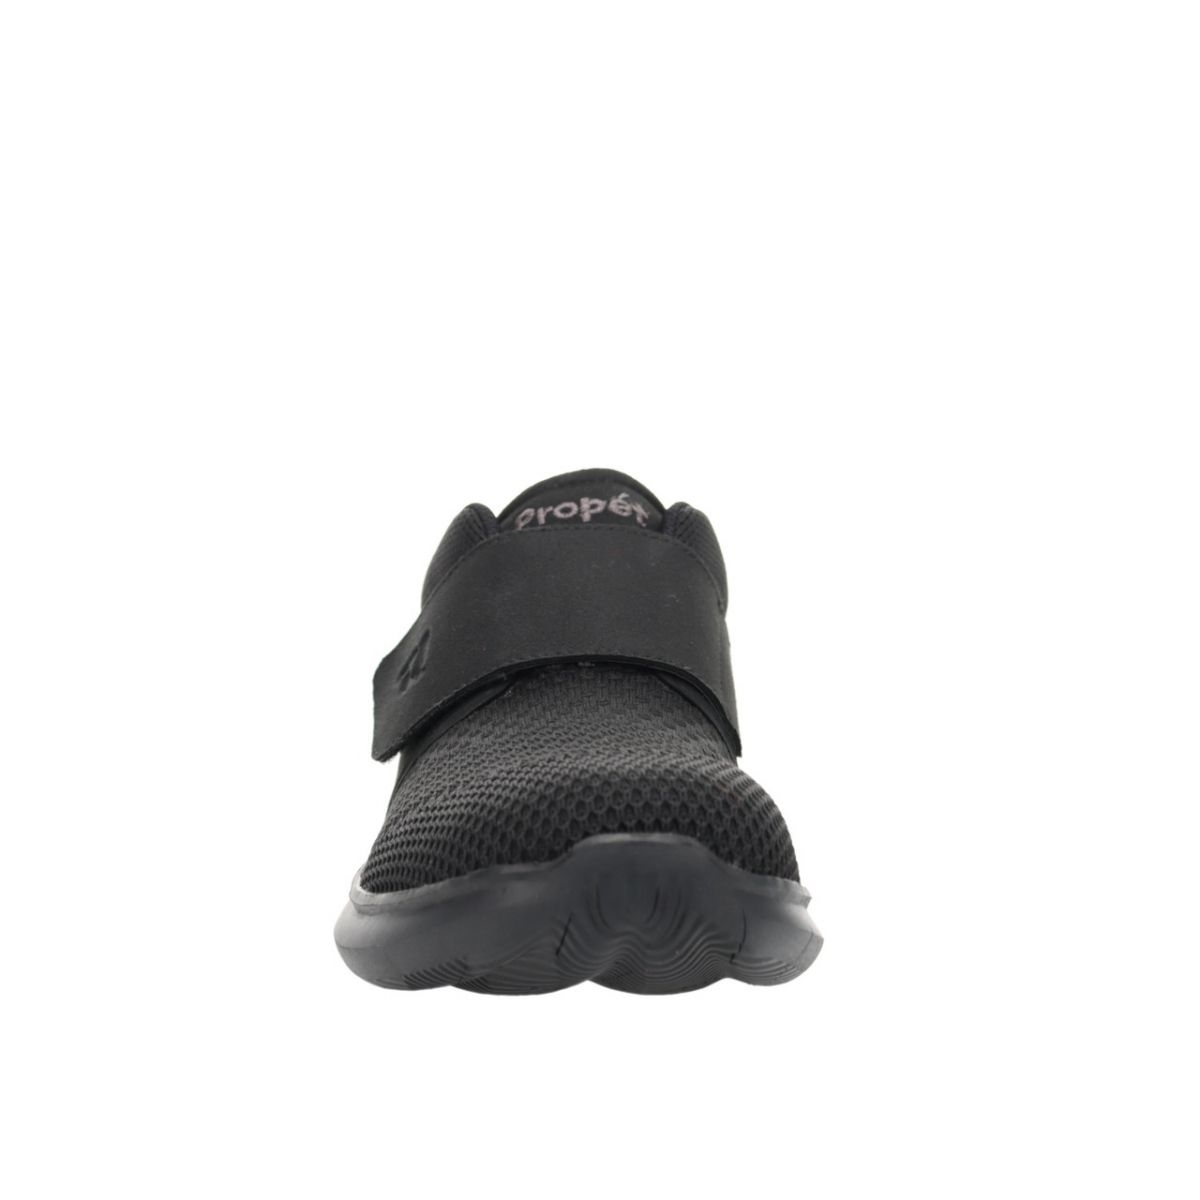 Propet Men's Viator Strap Walking Shoe All Black - MAA073MABL ALL BLACK - ALL BLACK, 9.5 X-Wide